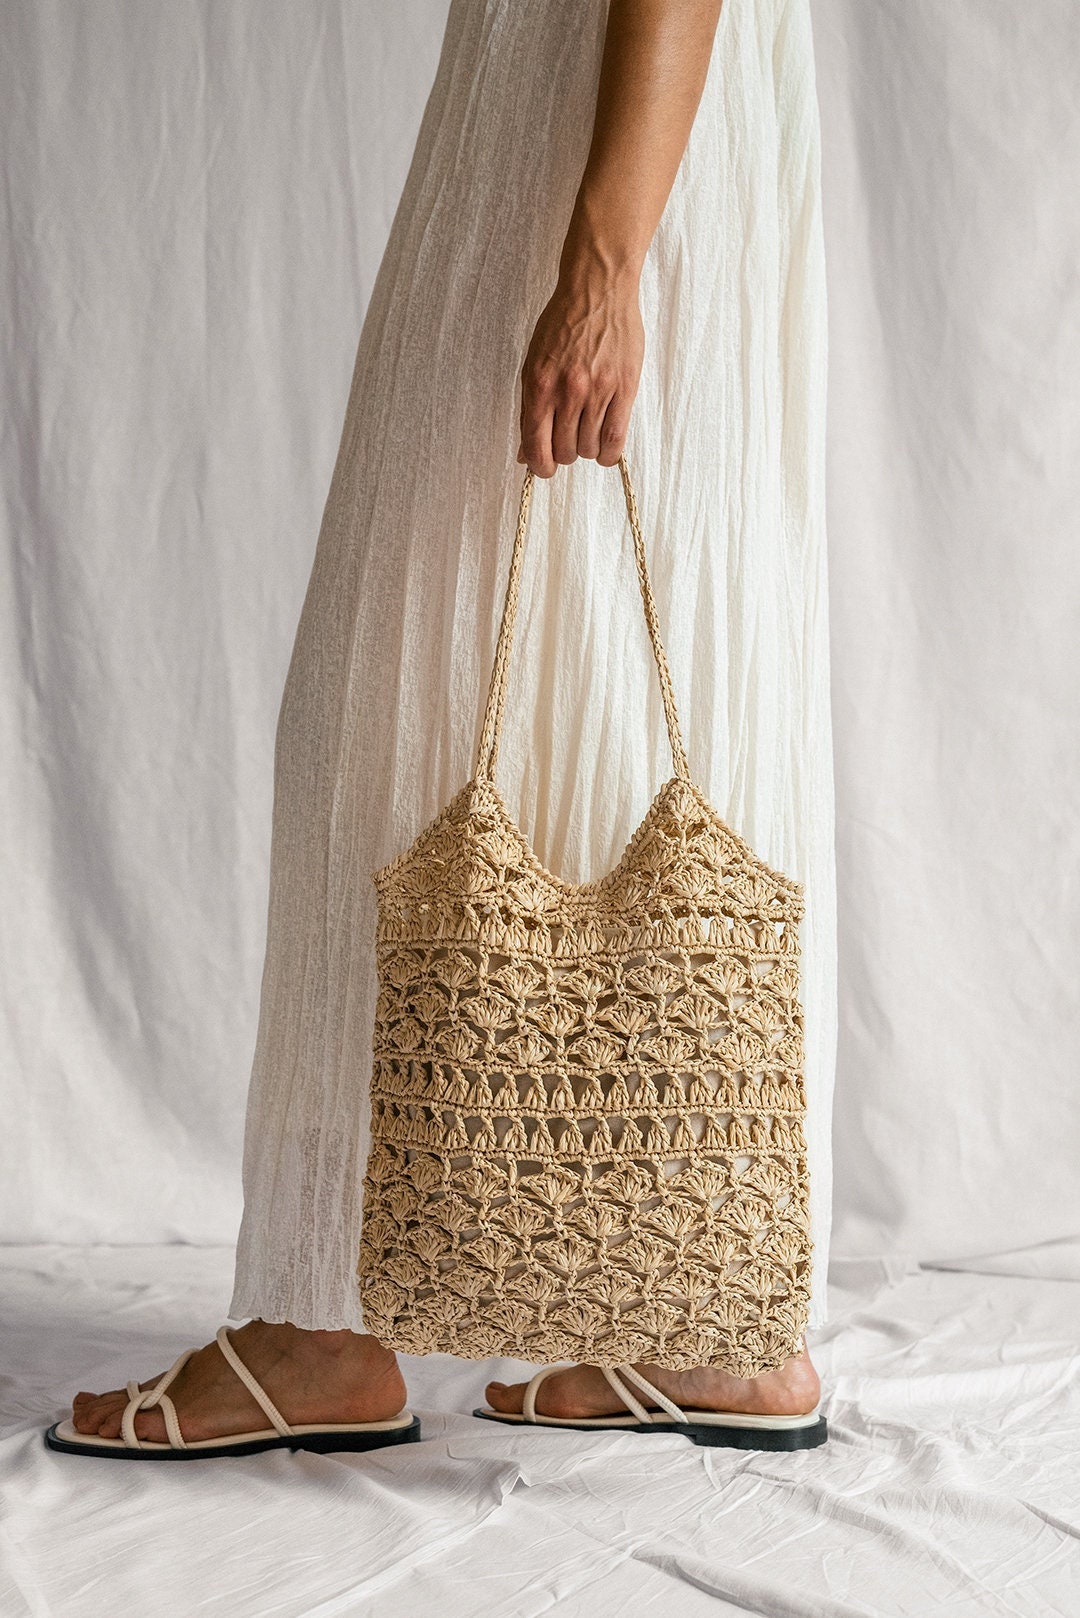 Buy Crochet Prada Bag Online In India -  India